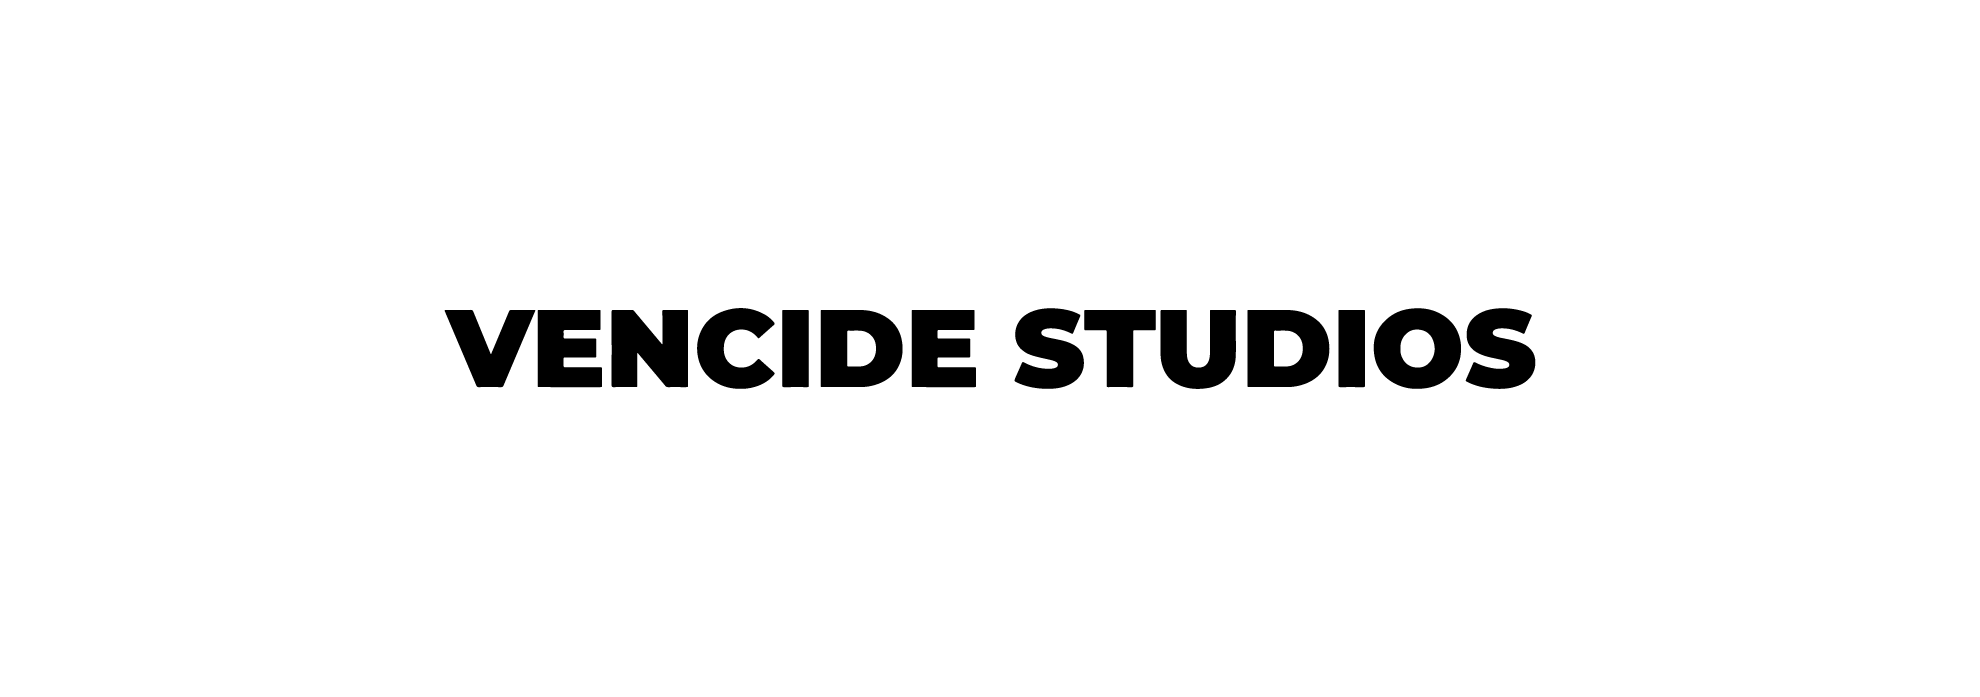 Vencide Studios Logo 1